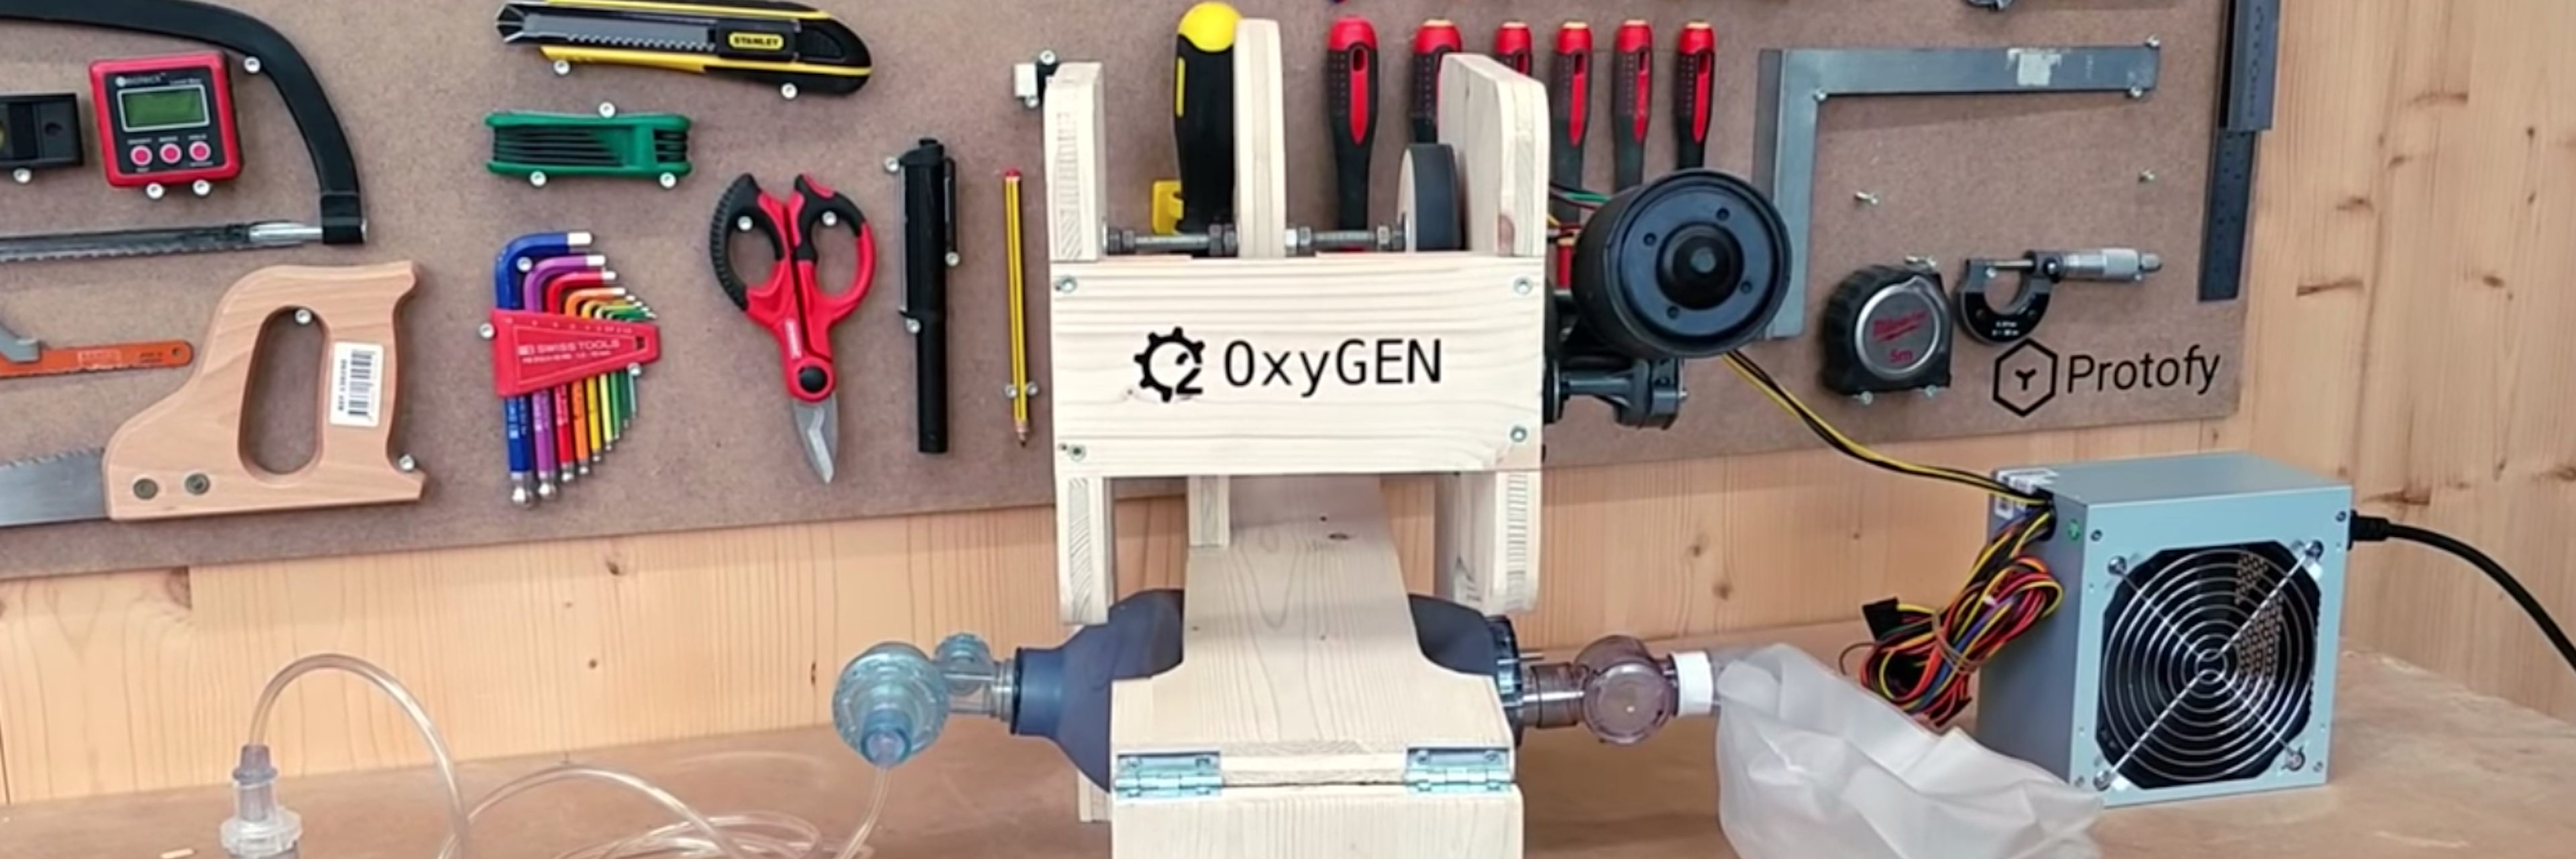 Picture of OxyGen emergency ventilator prototype